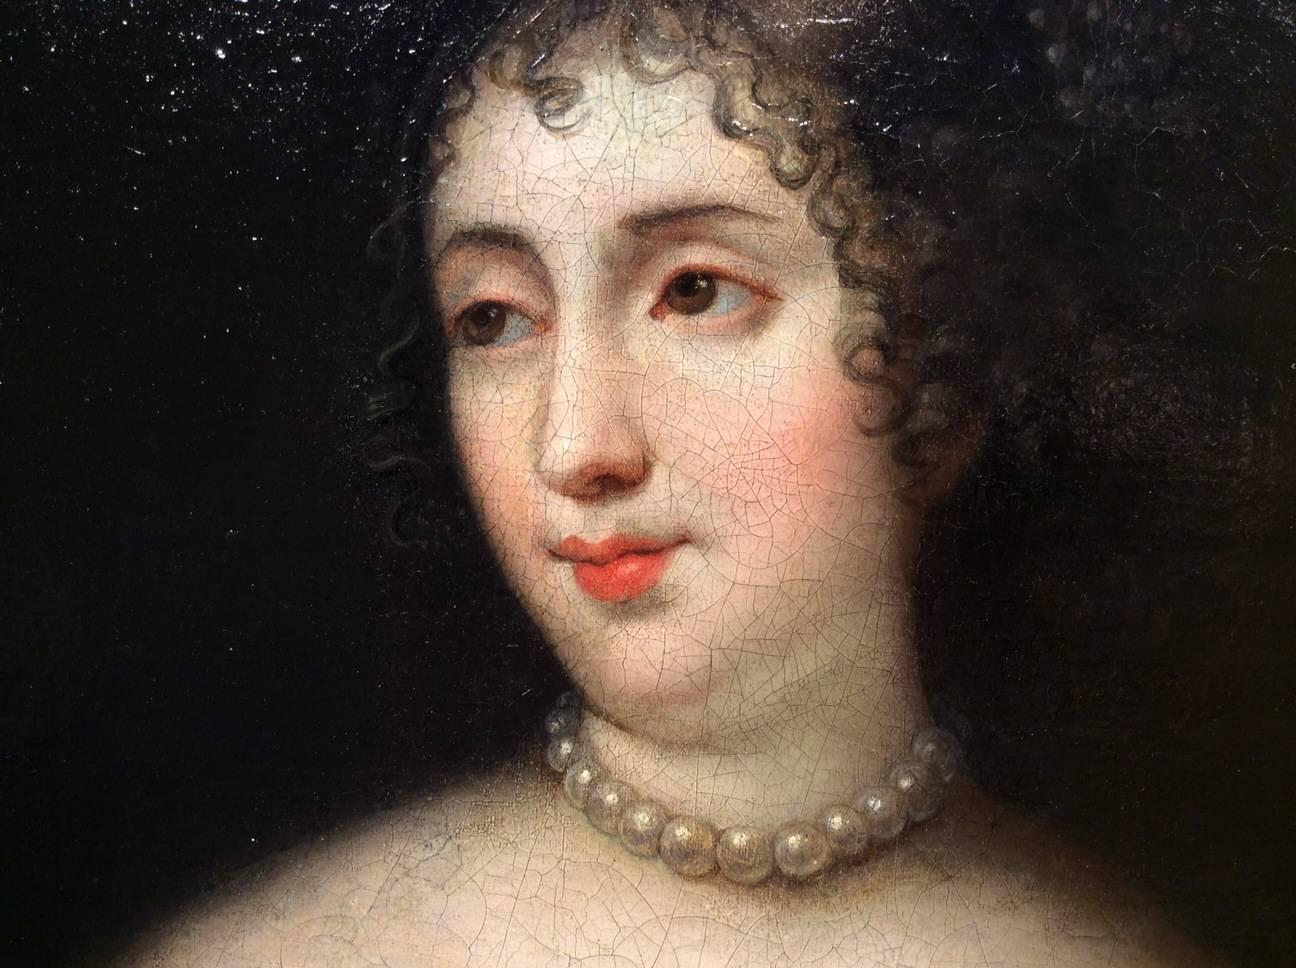 Portrait of Elisabeth de Montmorency, Princess of Mecklenburg, oil on canvas, Atelier of Pierre Mignard, France, 17th century,
The canvas is inscribed 